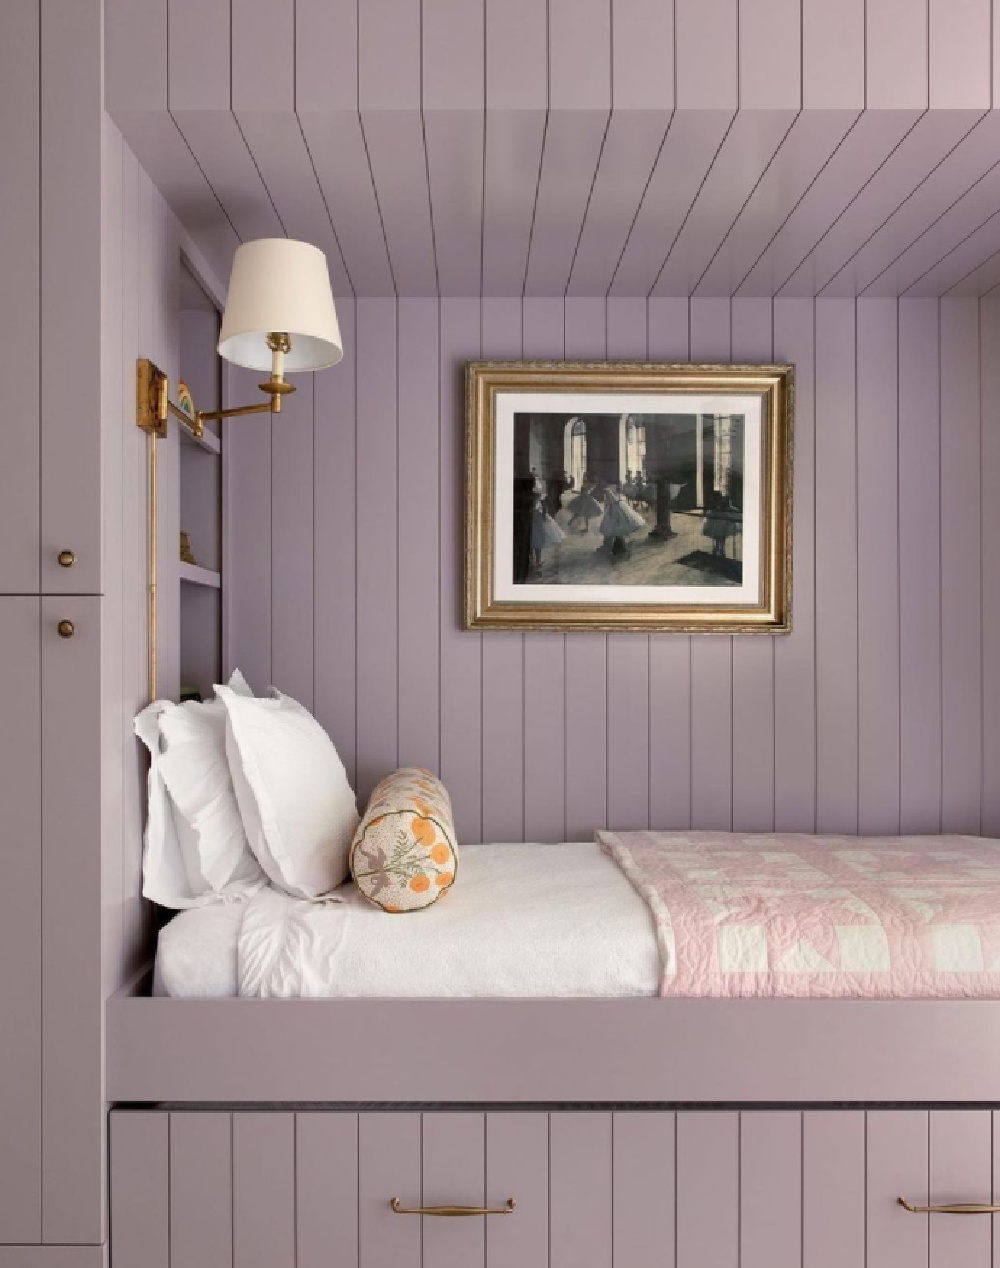 Cozy sleeping nook painted lavender - @shannoneddingsinteriors. #lavender #paintcolors #cozynook #bednook